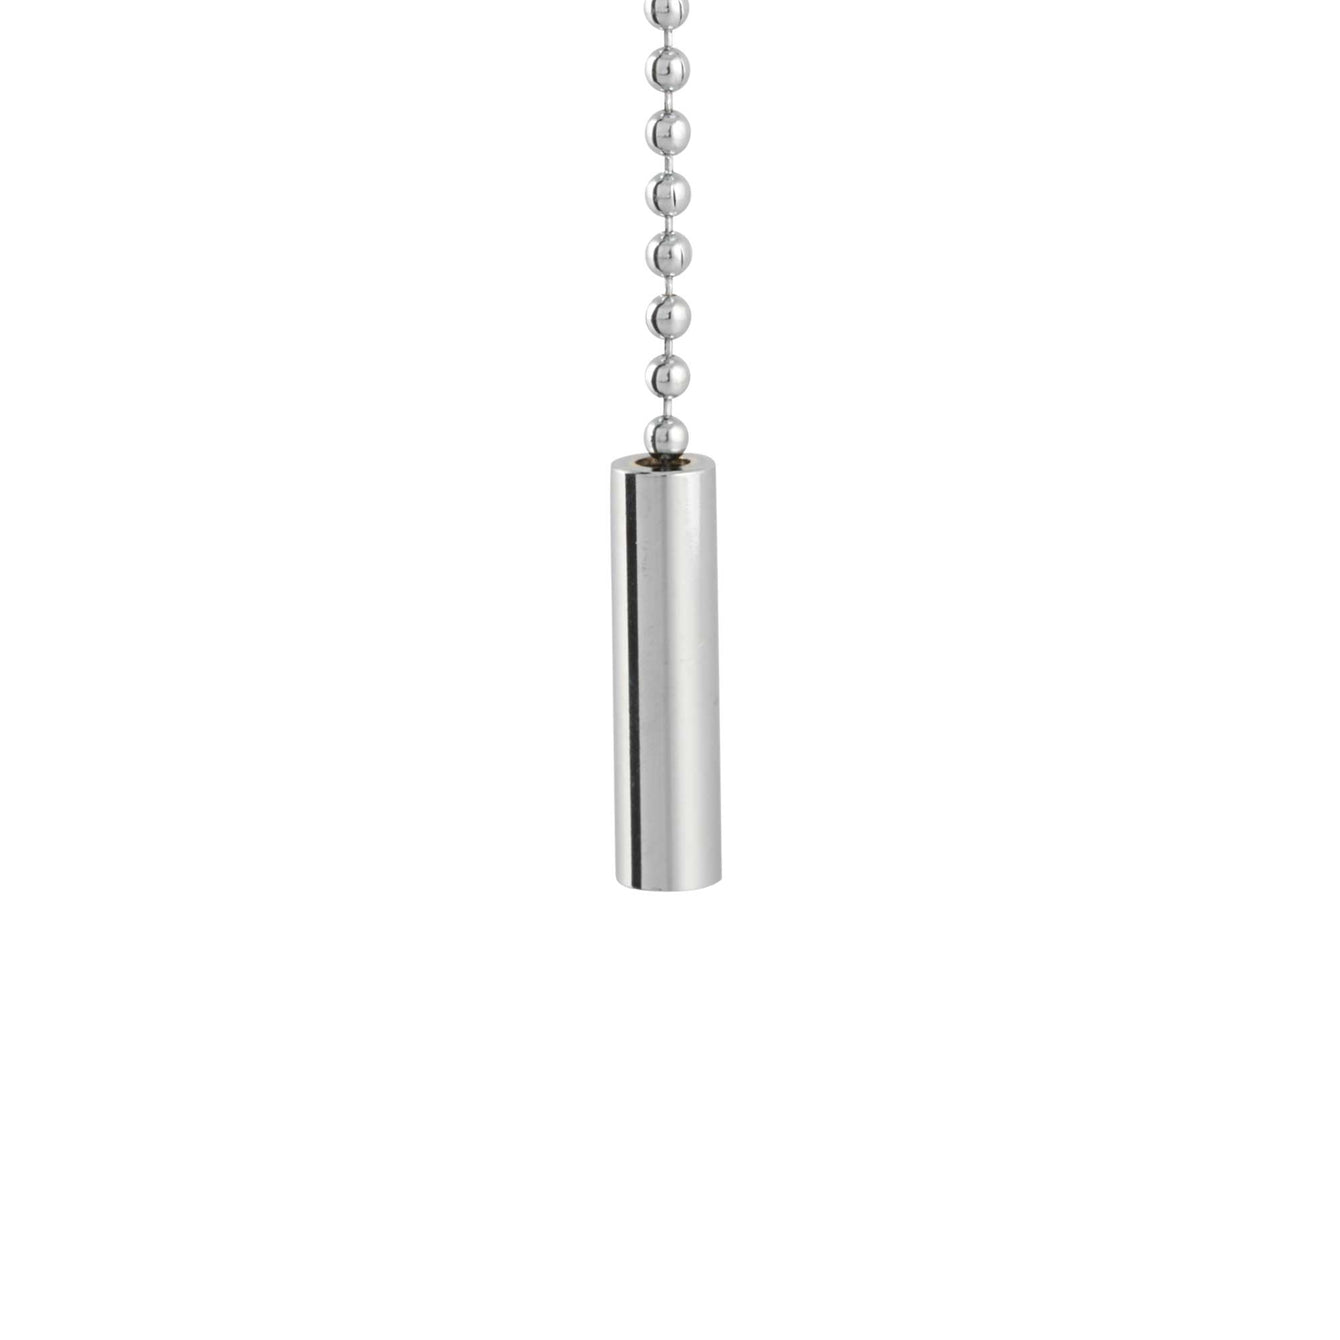 ElekTek Light Pull Chain Chrome Pendant With 80cm Matching Chain - Buy It Better Toggle